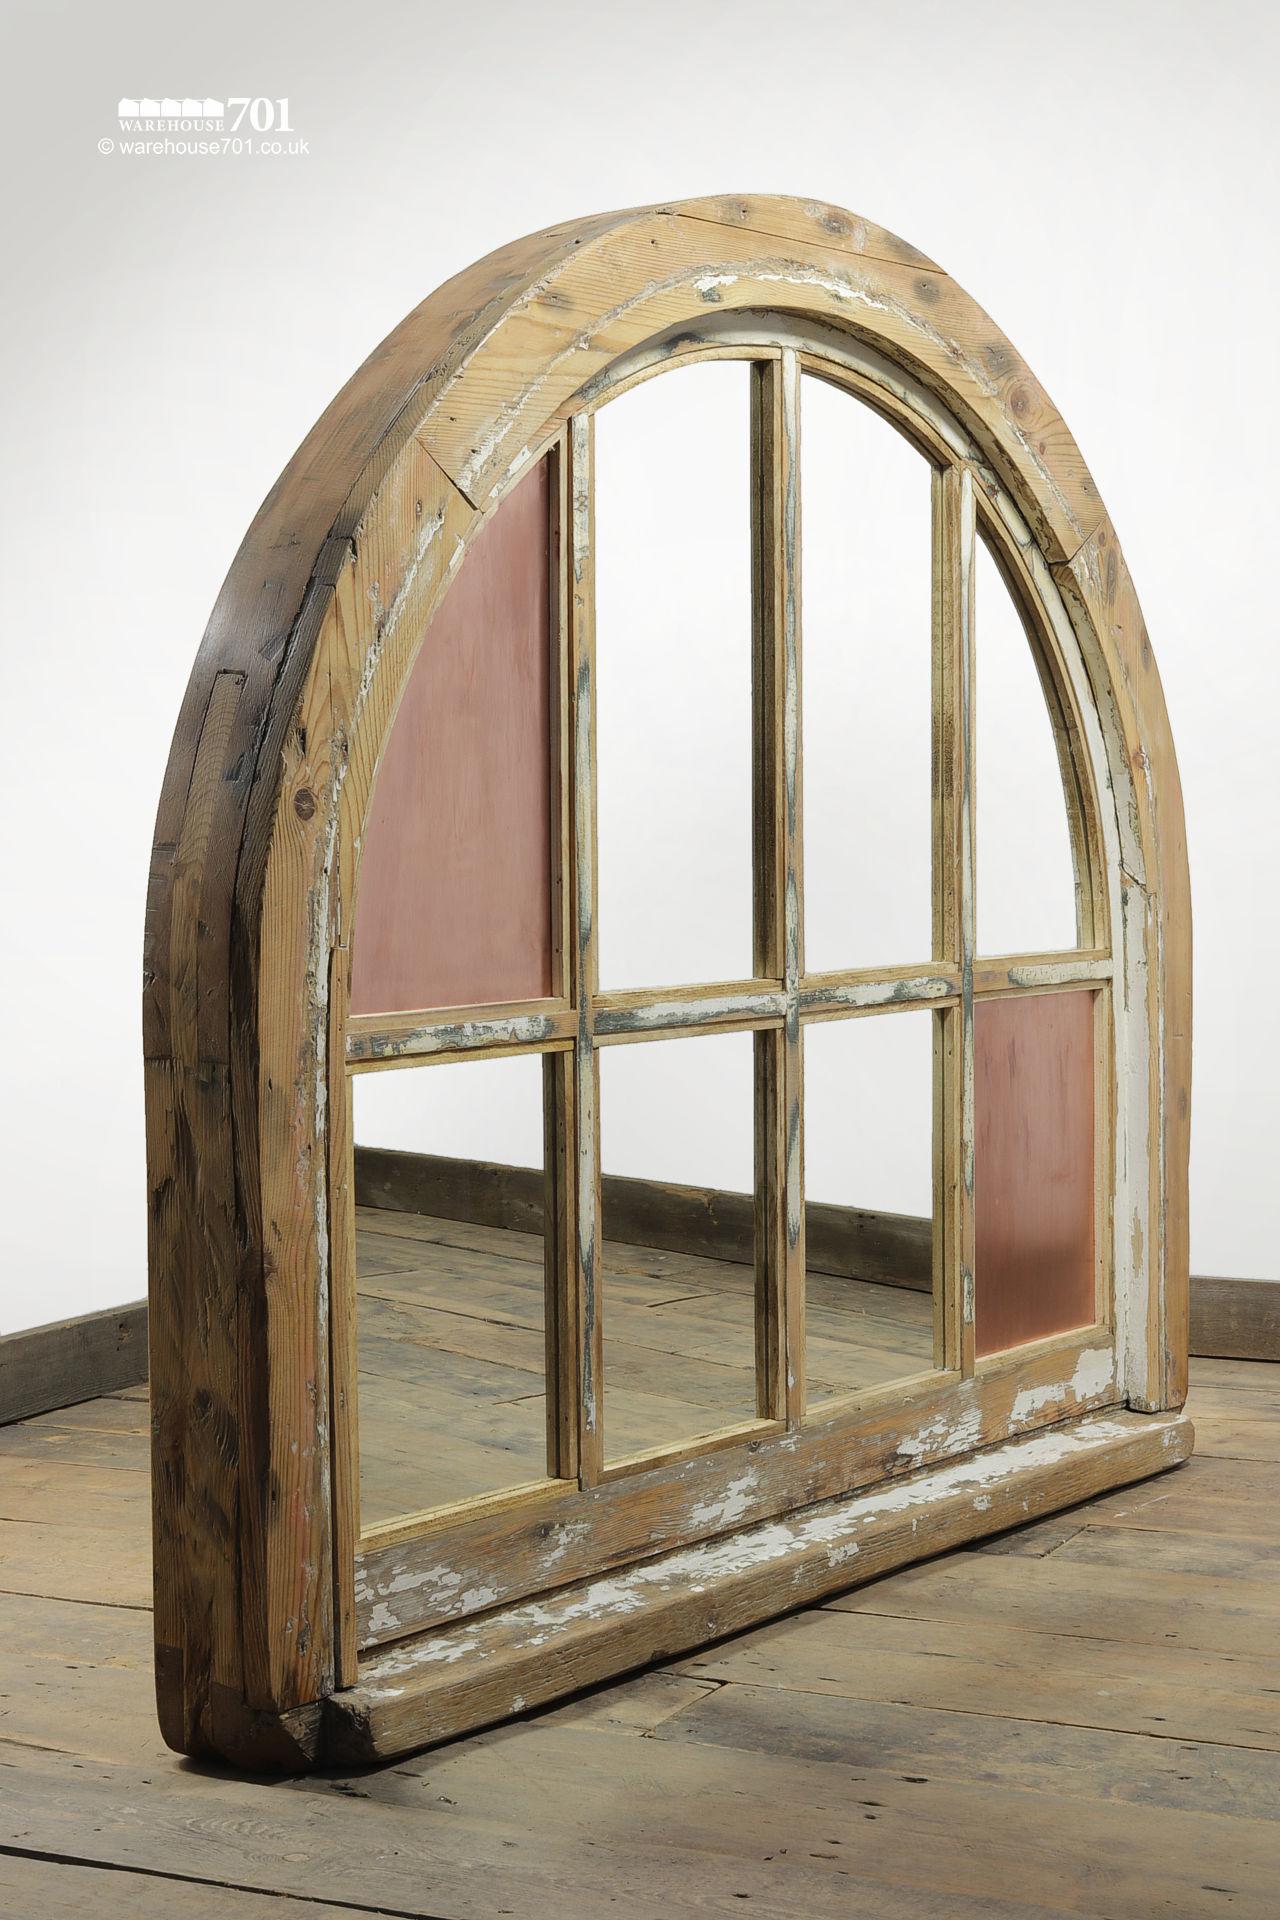 Impressive Architectural Copper and Wood Window Mirror #1